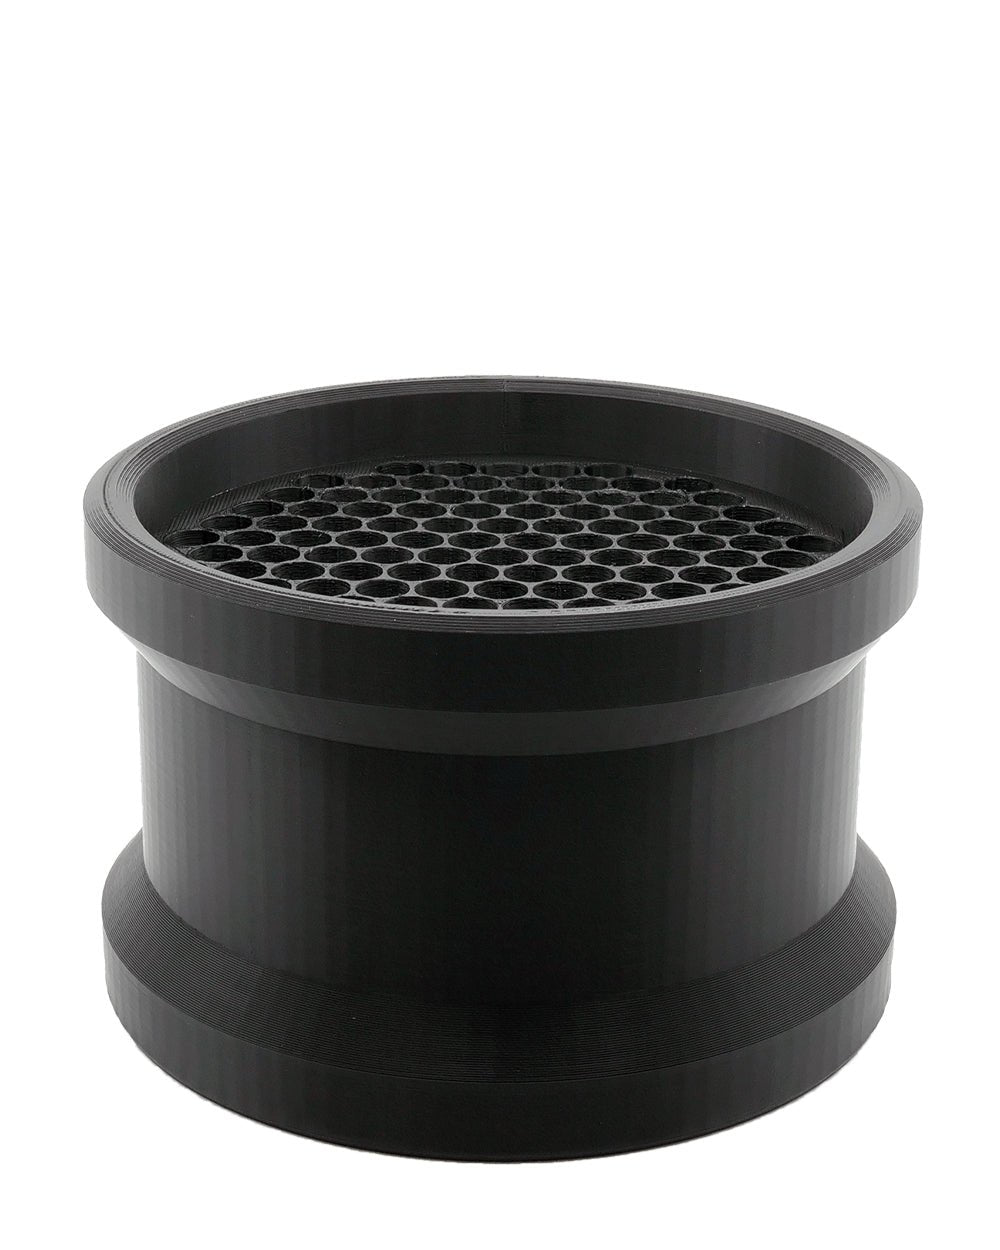 HUMBOLDT | Black Pre-Rolled Cones Filling Machine Cartridge 98mm | Fill 121 Cones Per Run - 1